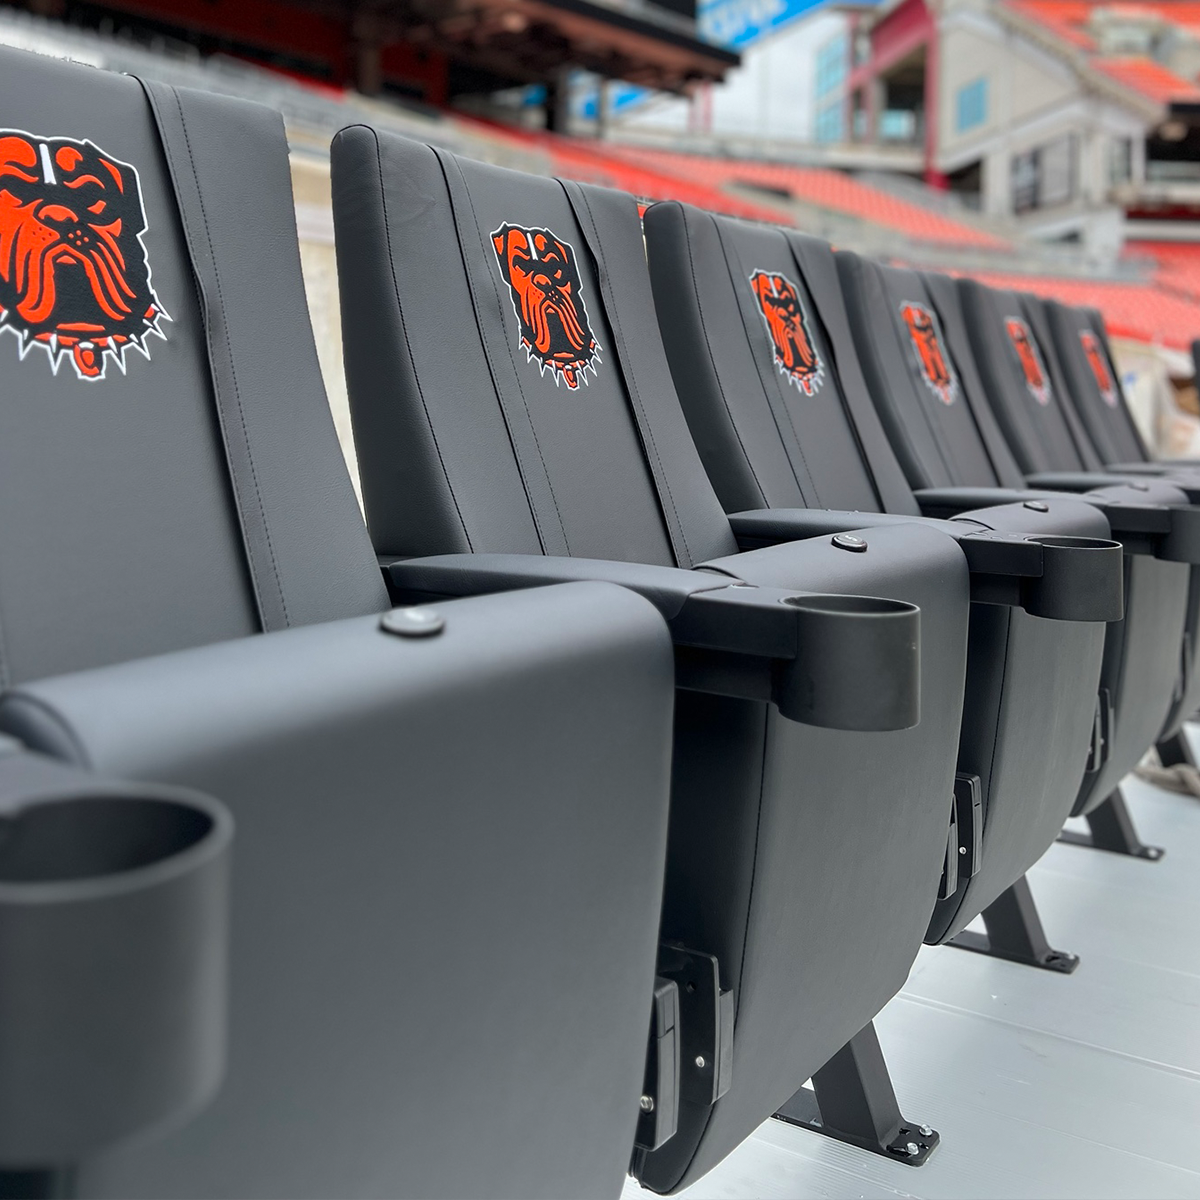 SuiteMax 3.5 VIP Seats with Buffalo Bulls Logo